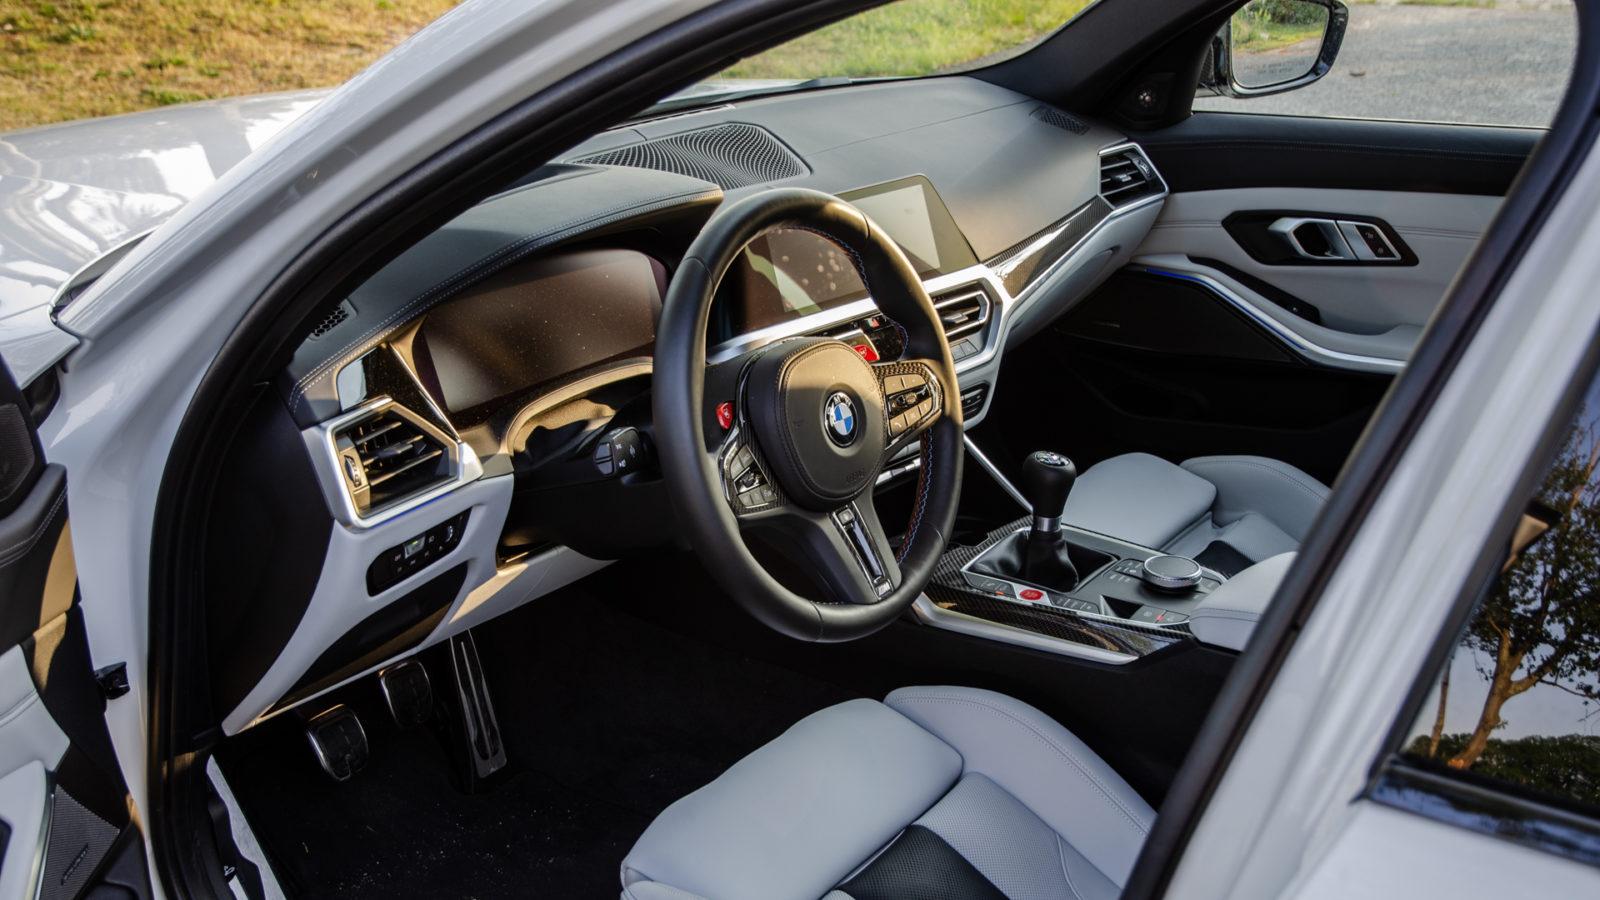 BMW M3 Manual Test Drive 18 of 37 830x467